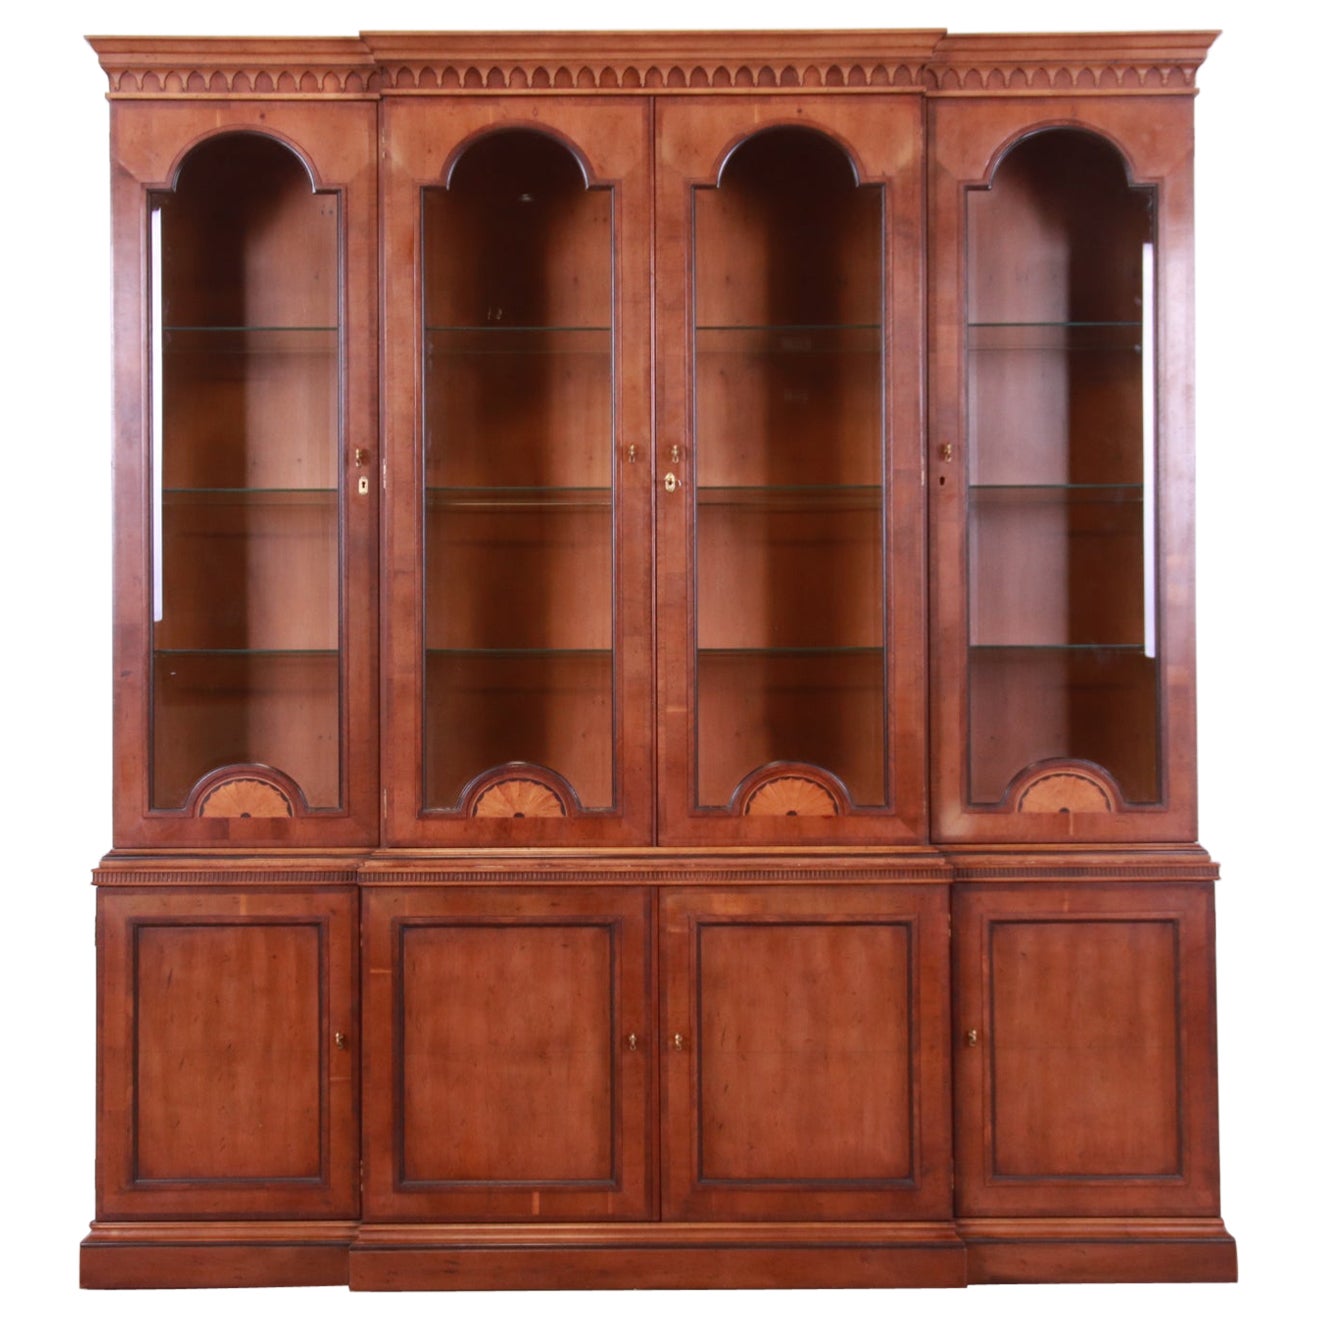 Henredon English Georgian Inlaid Yew Wood Breakfront Bookcase Cabinet